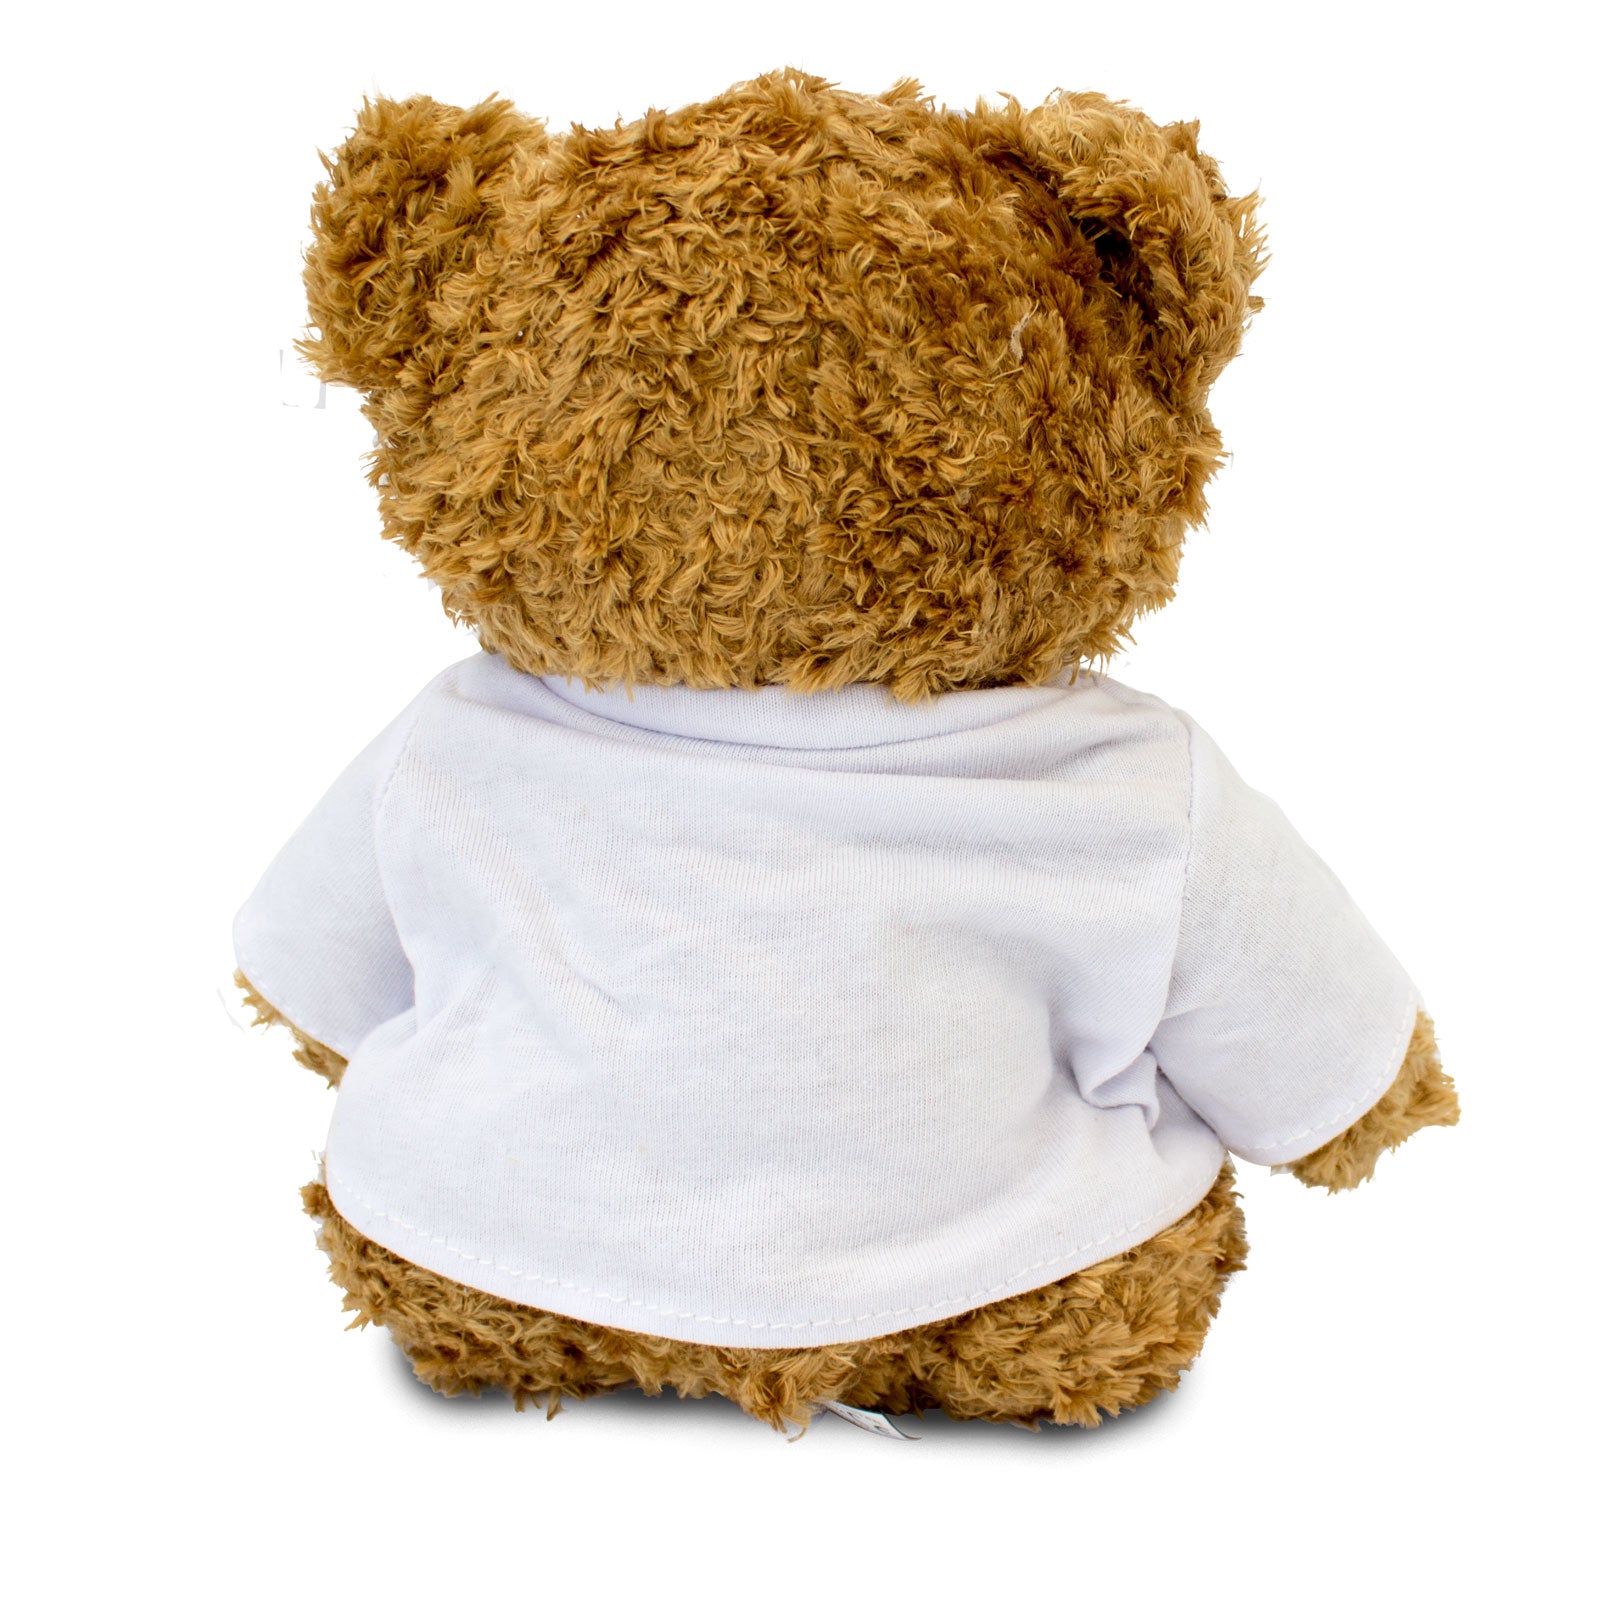 Get Well Soon Erin - Teddy Bear